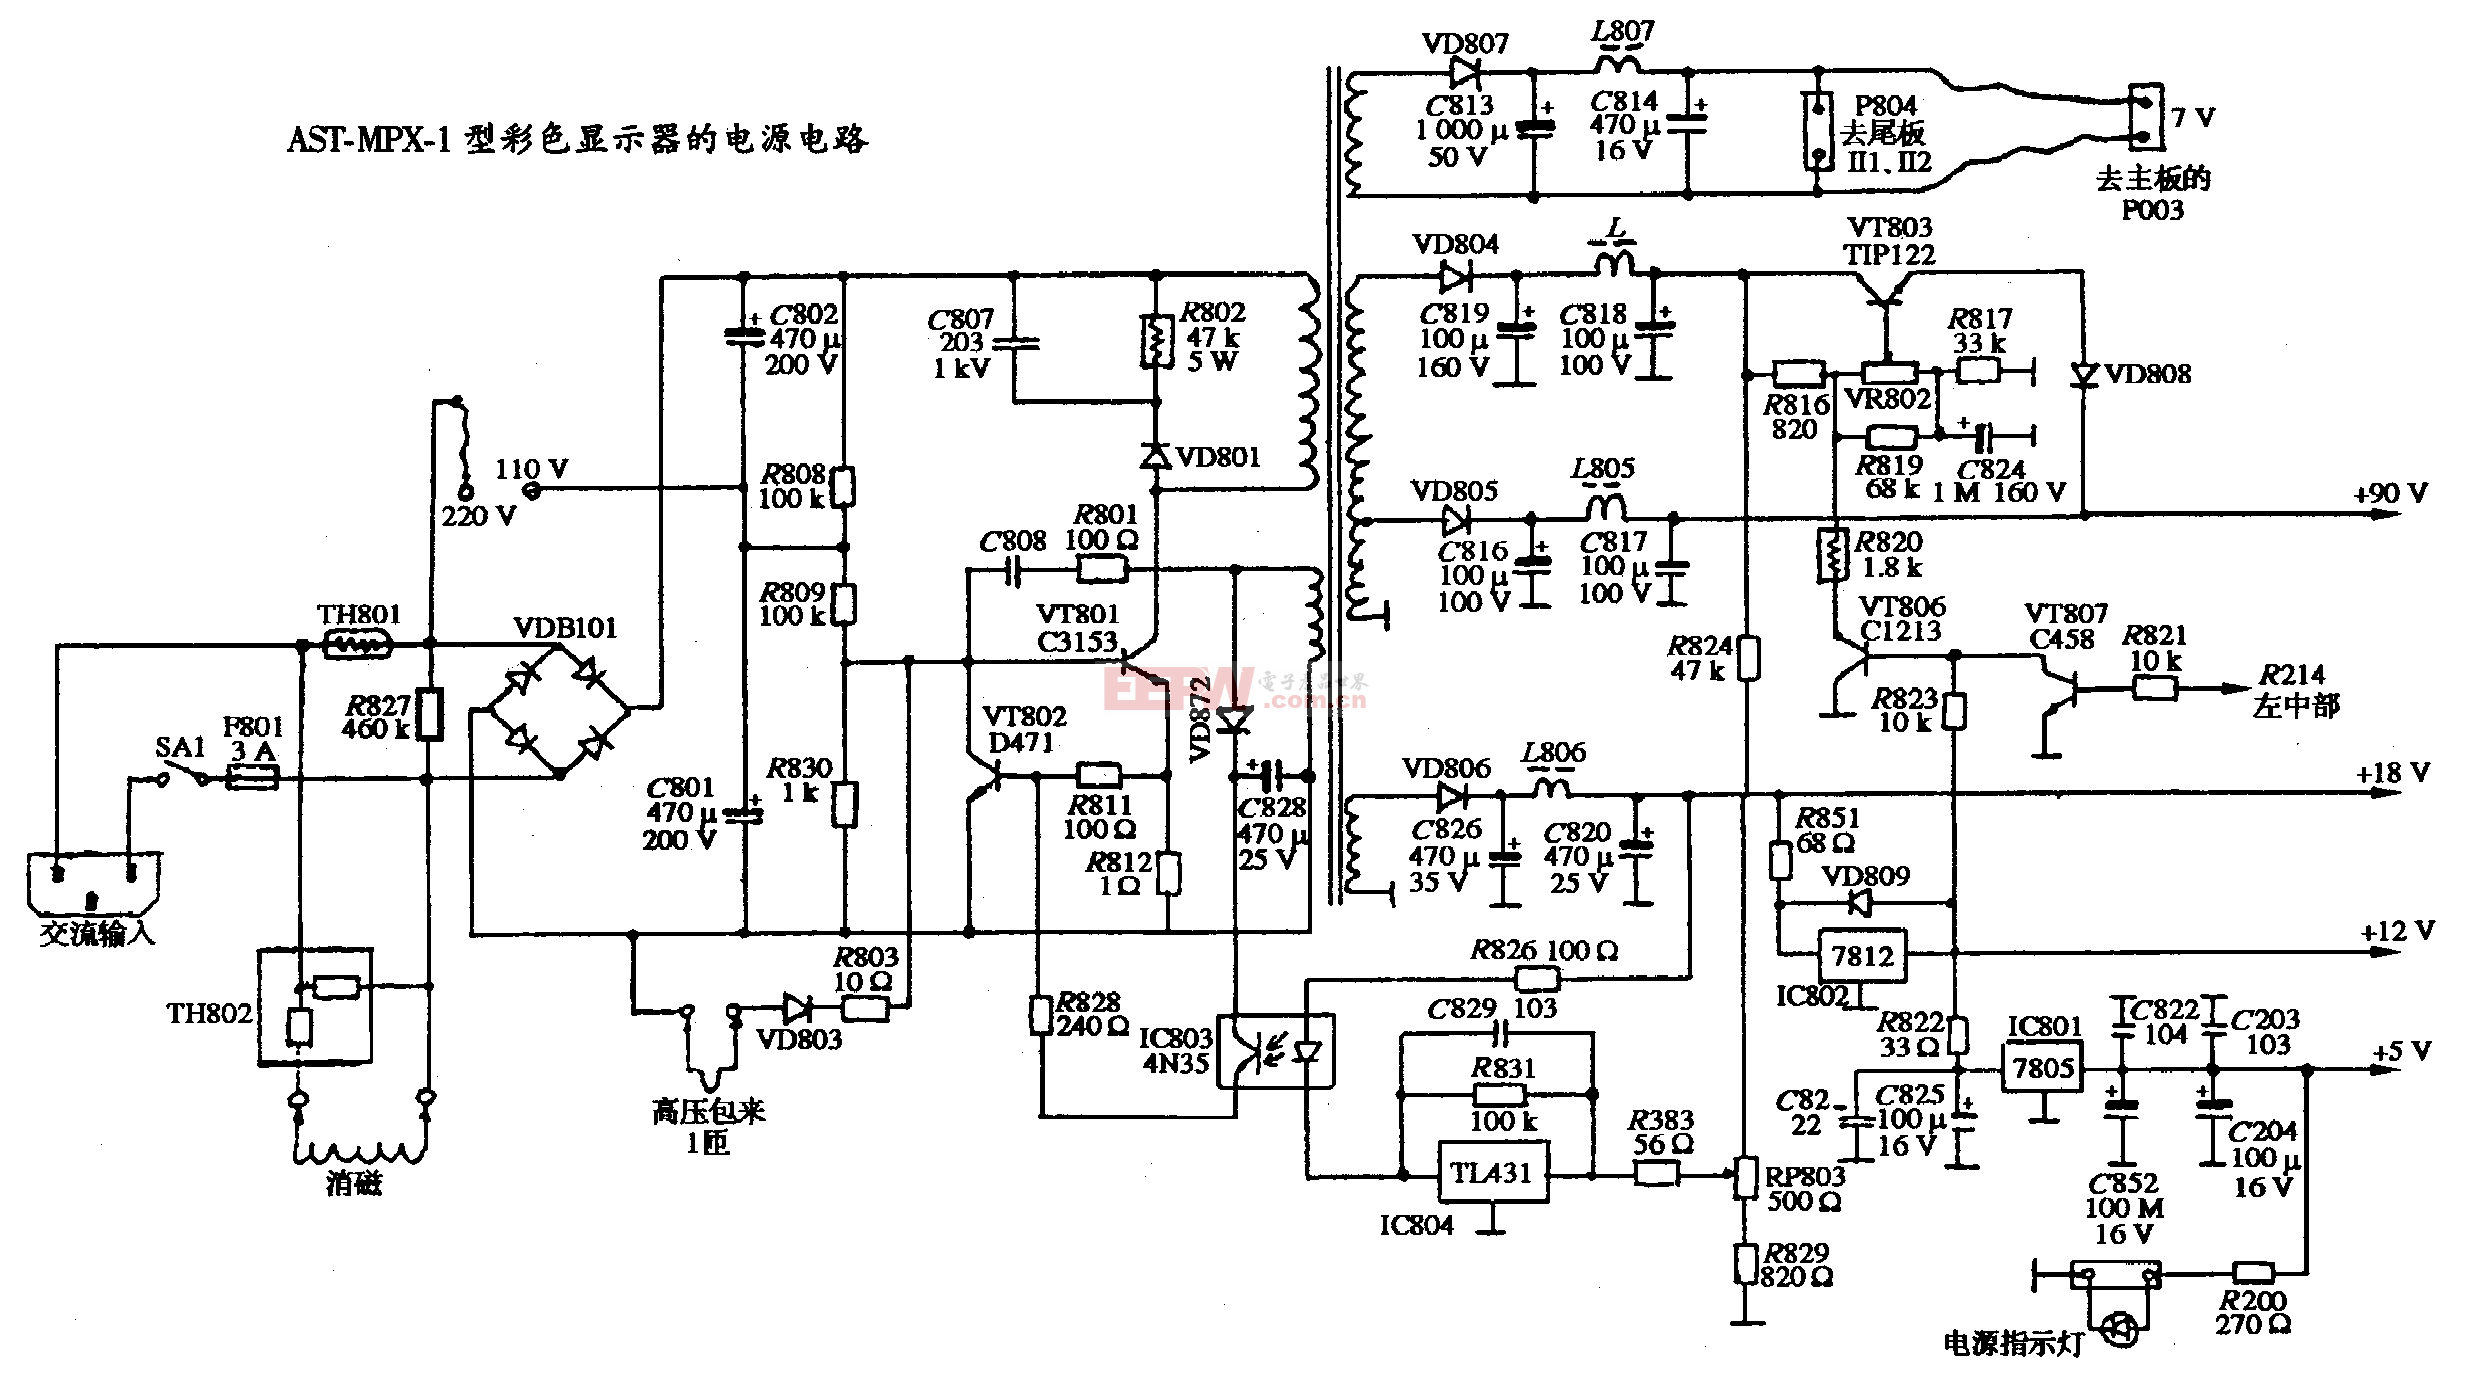 13、AST MPX-1型彩色显示器的电源电路图